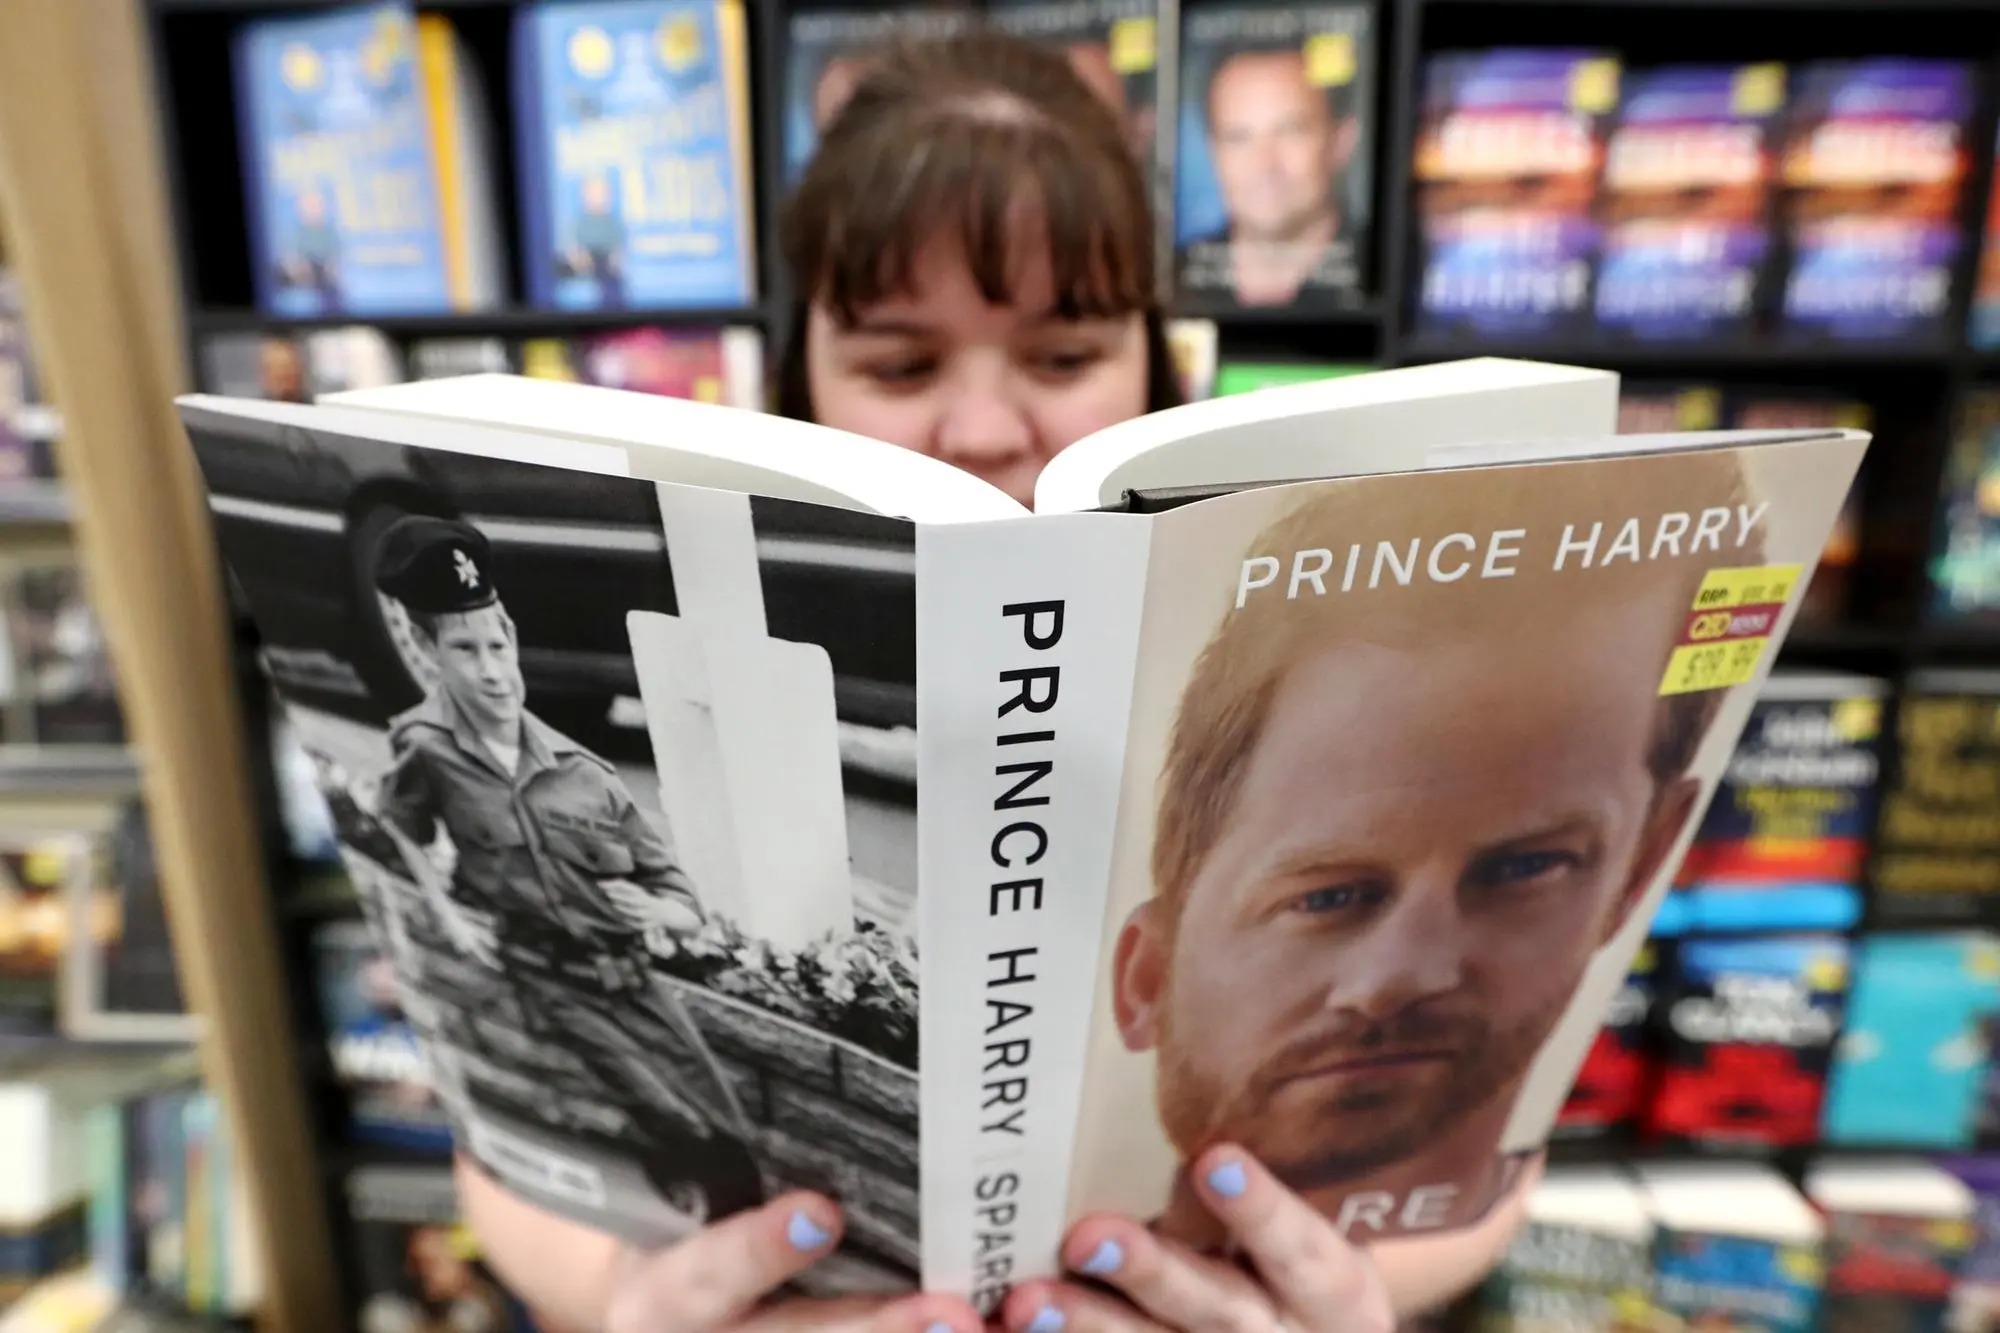 Prince Harry's biography